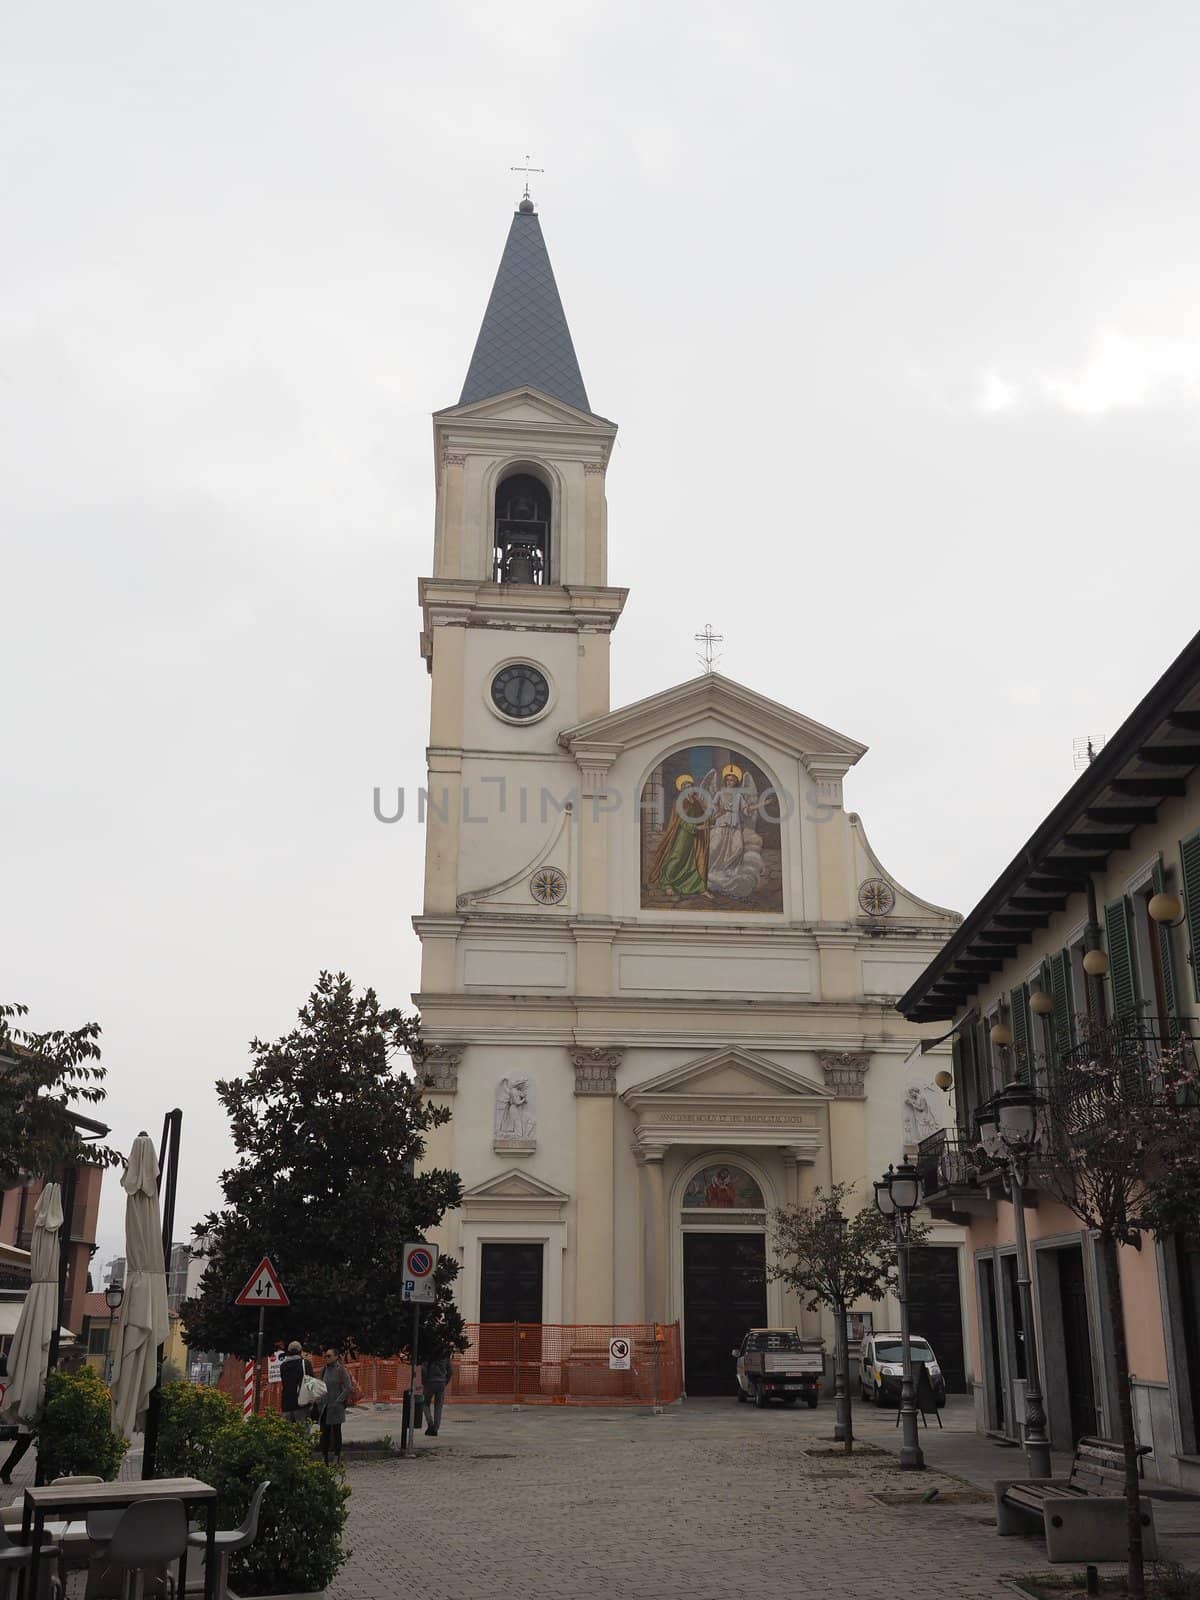 San Pietro in Vincoli (St Peter in Chains) church in Settimo Tor by claudiodivizia